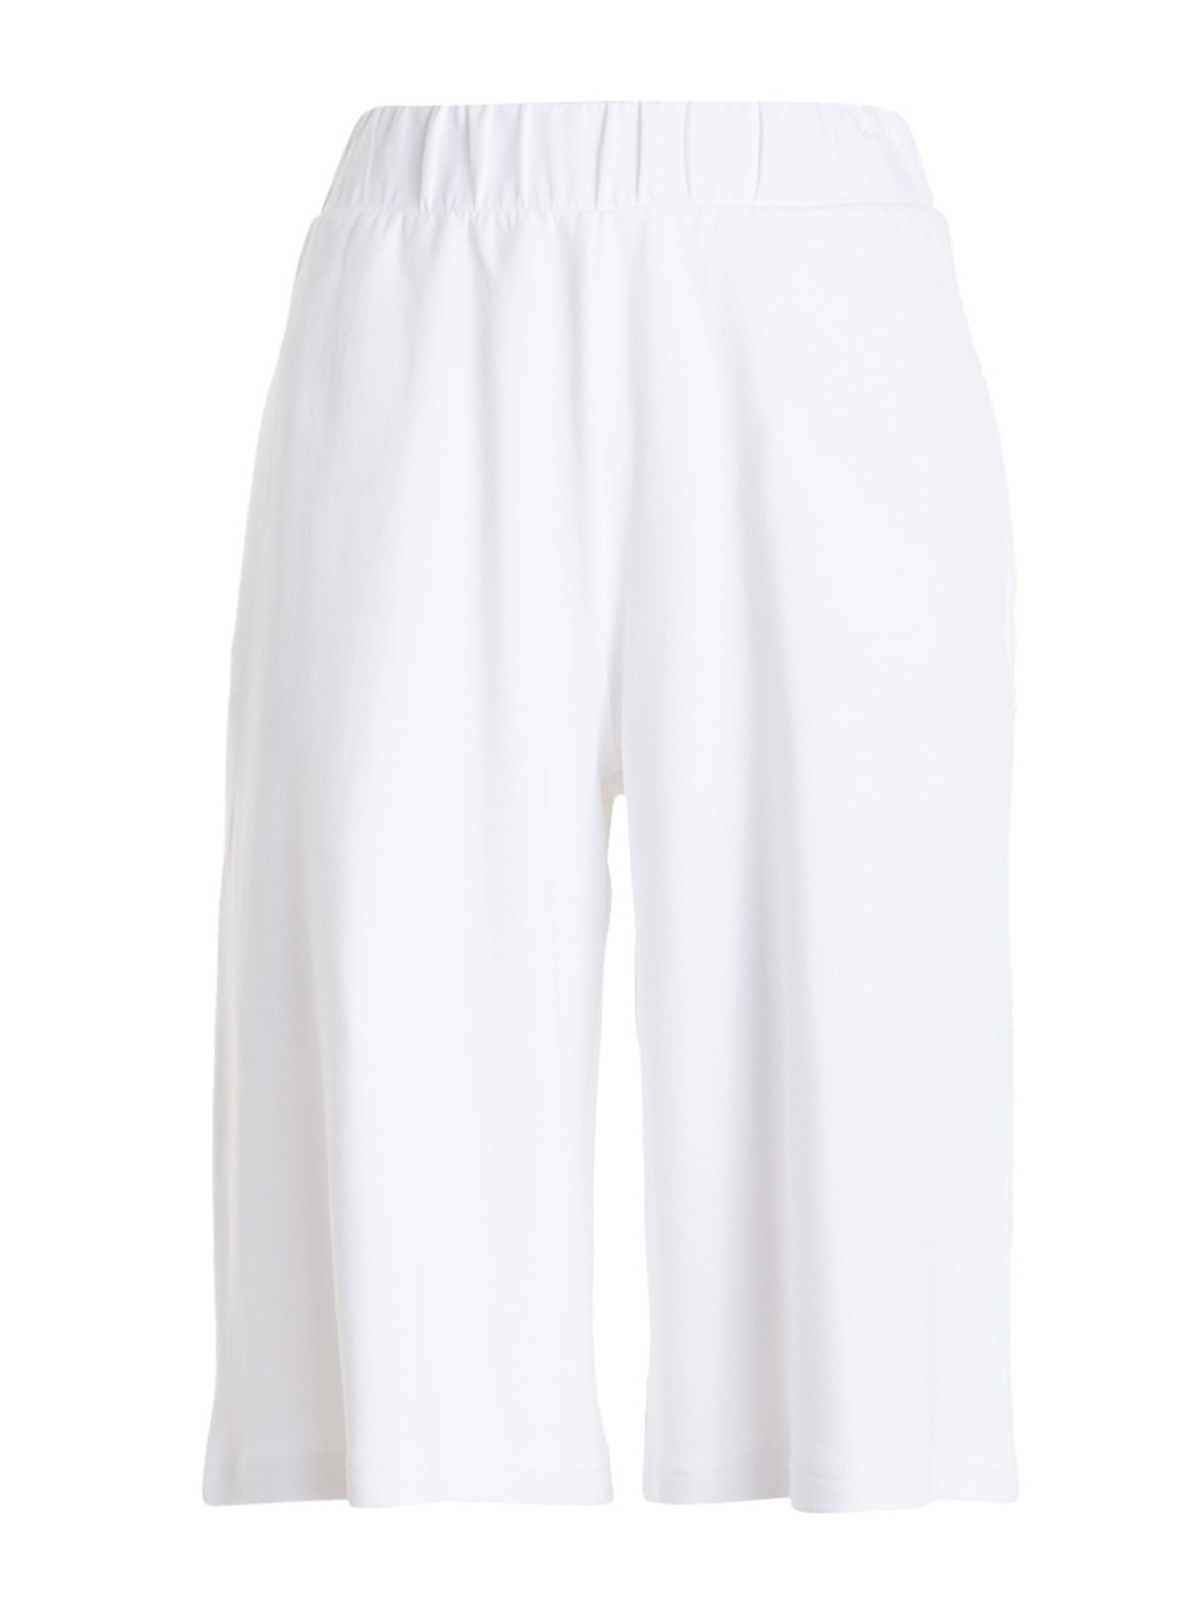 Max Mara Genero Bermuda Shorts In White